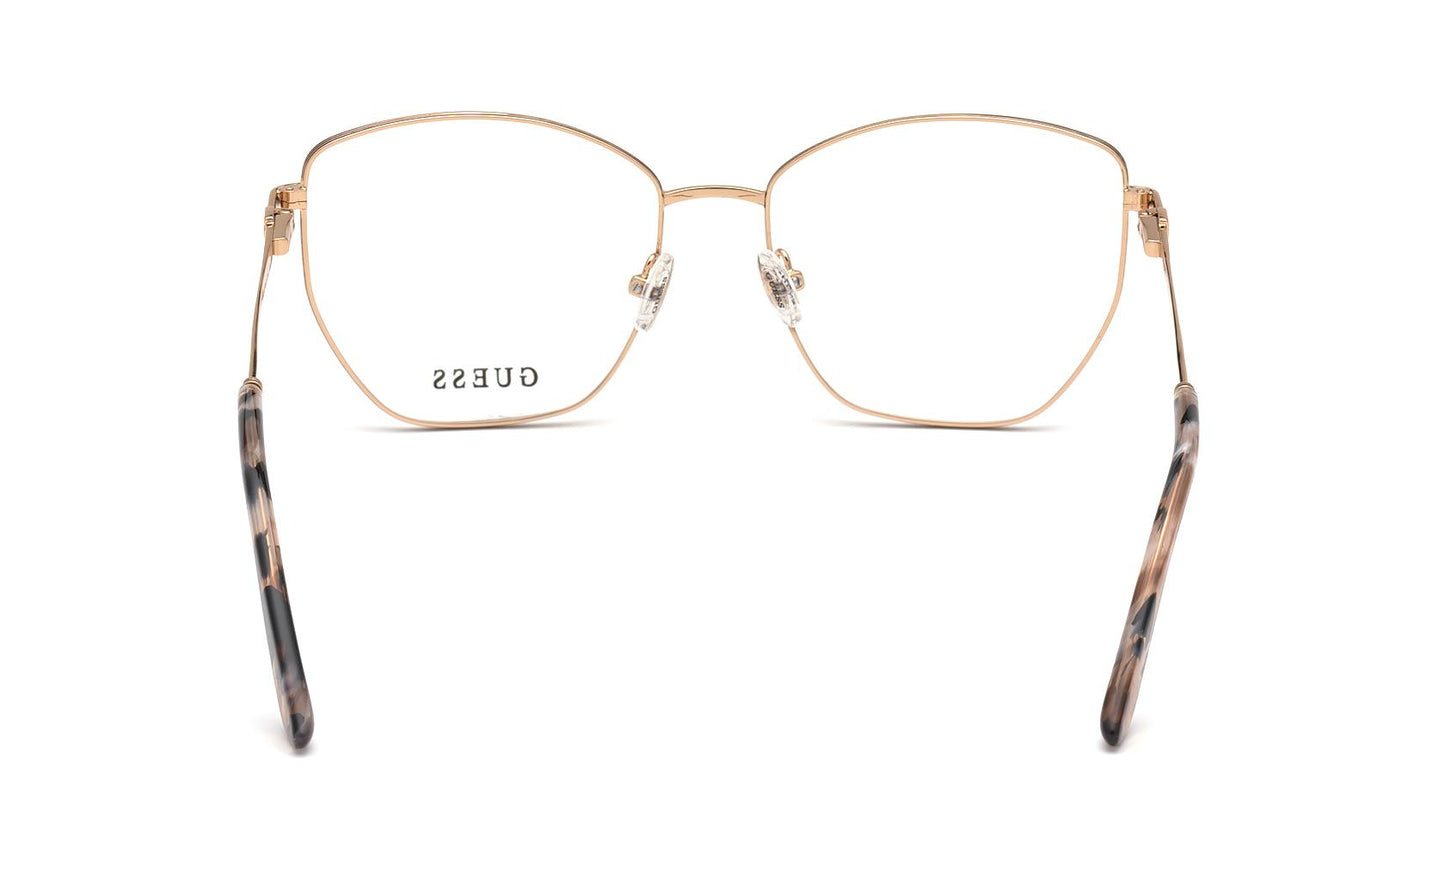 Guess Eyeglasses GU2825 005